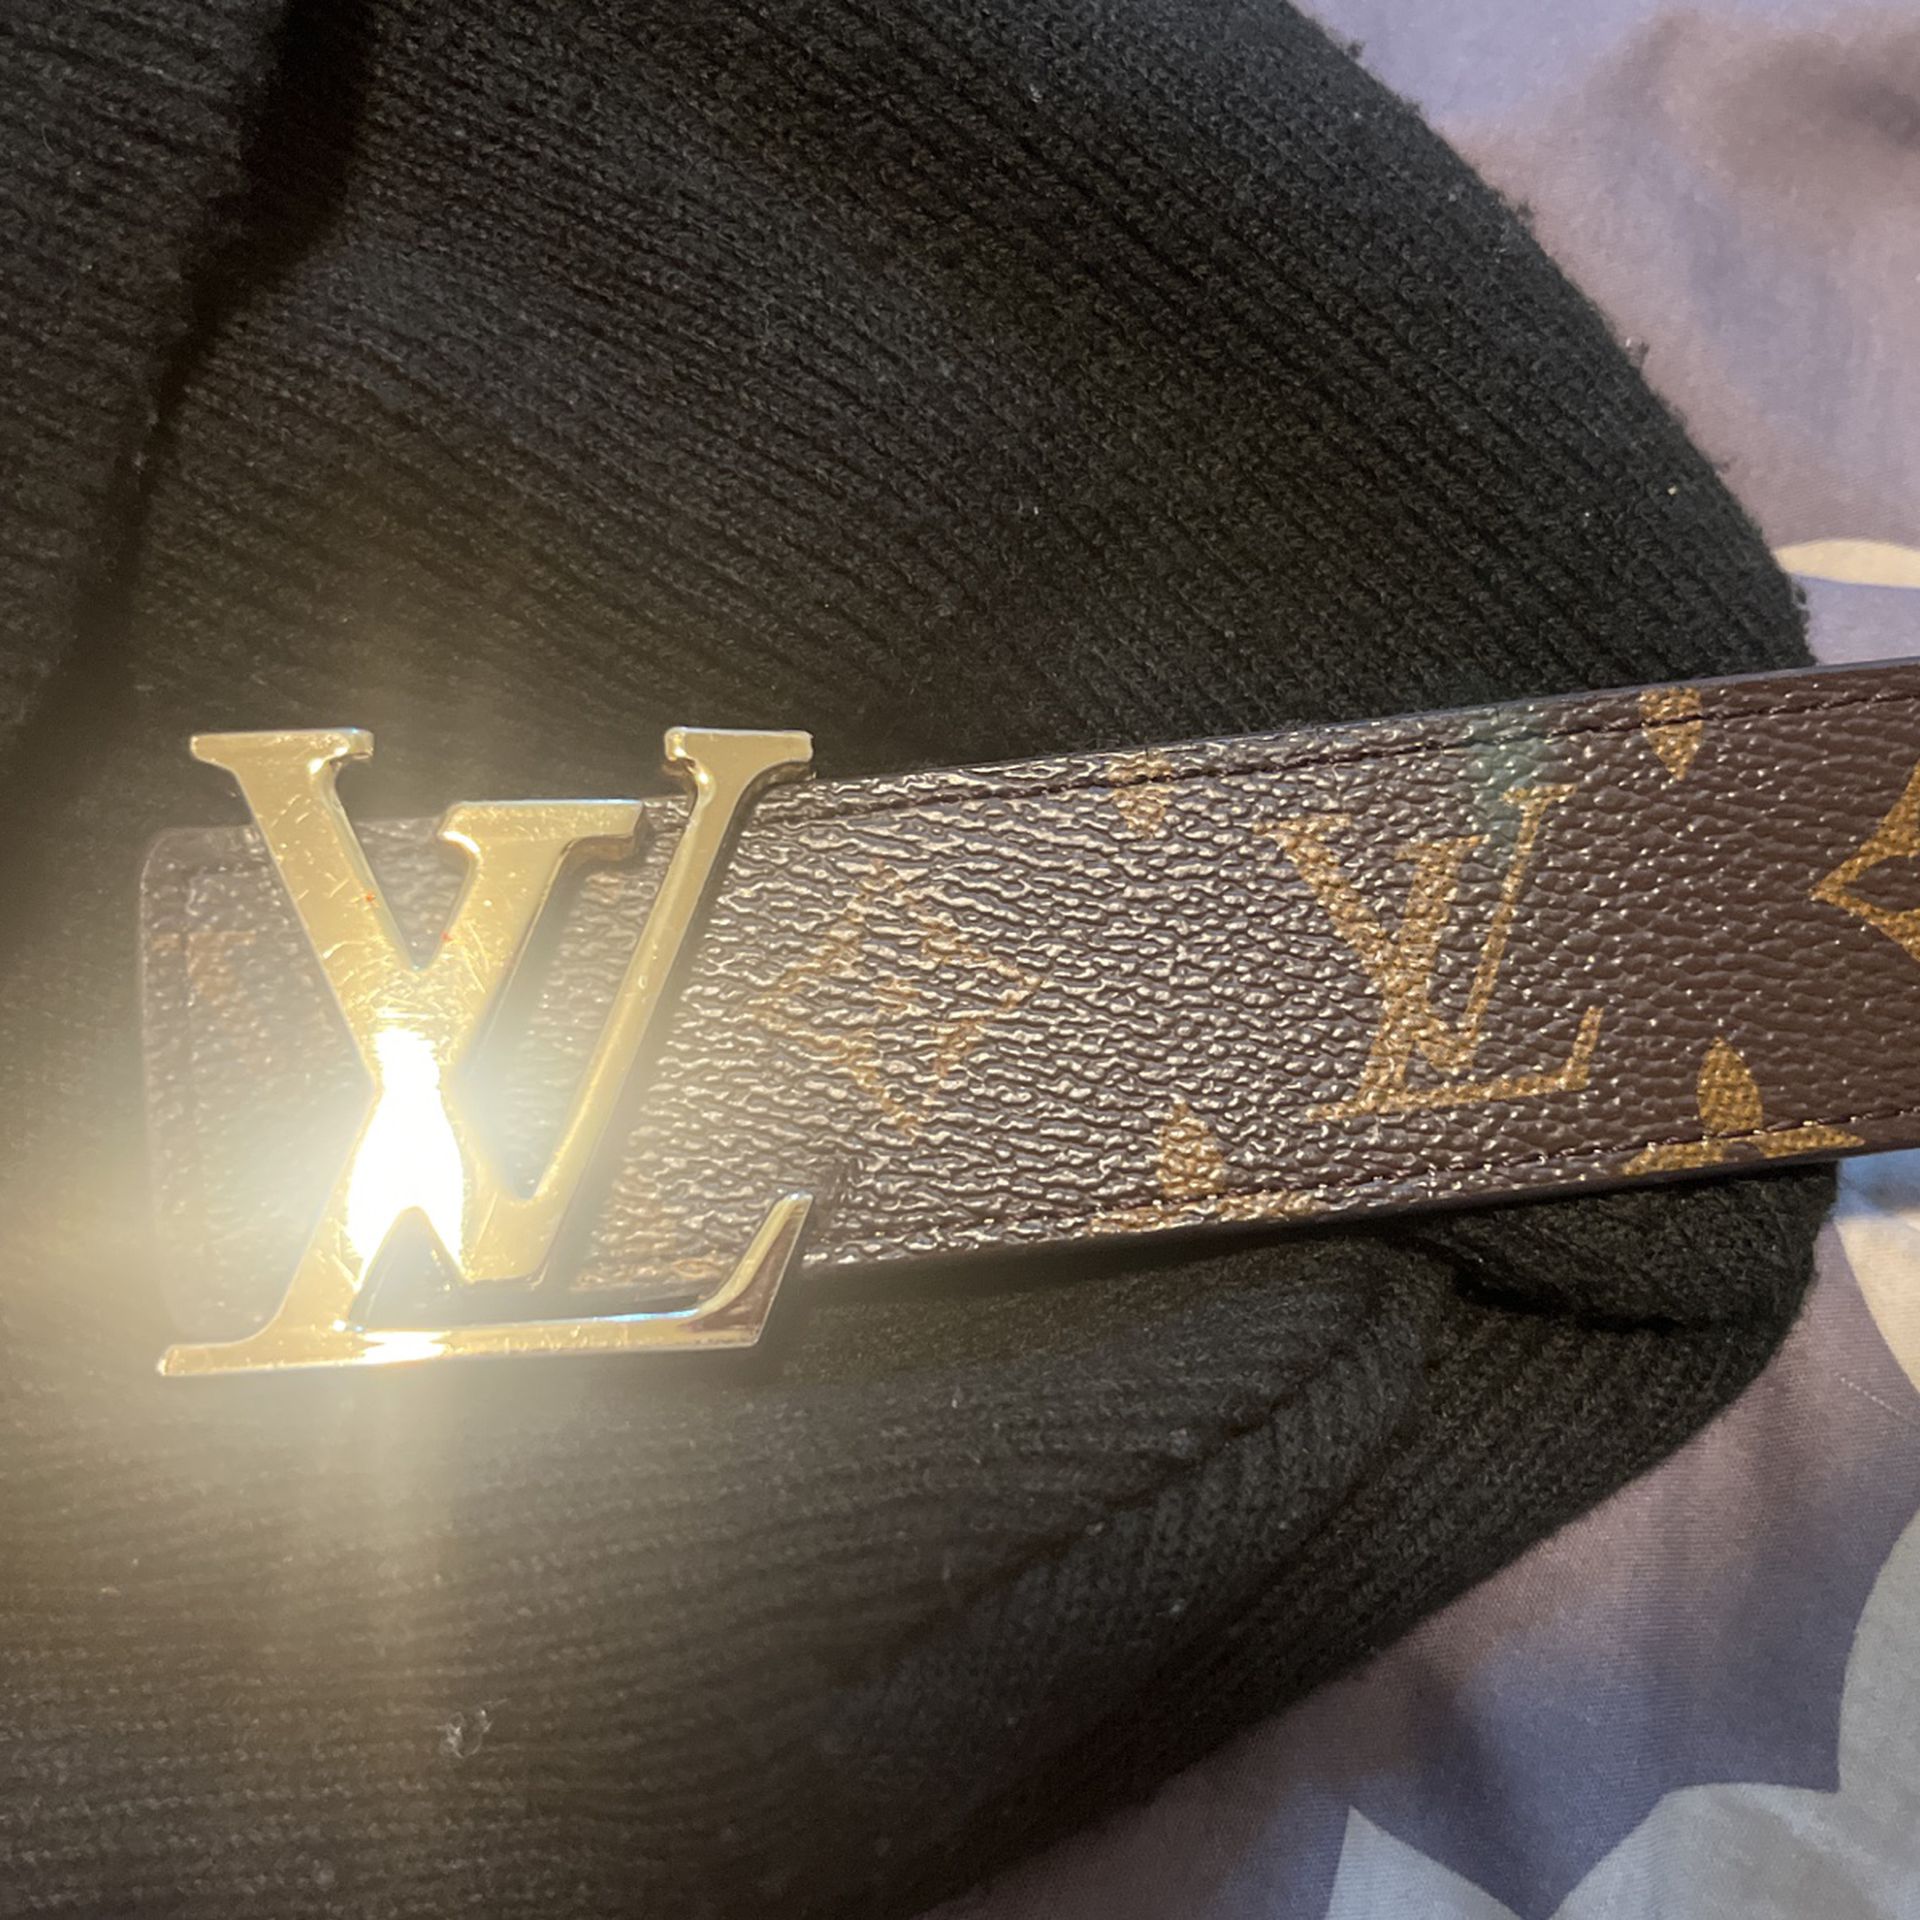 Louis Vuitton Belt for Sale in Windsor Hills, CA - OfferUp